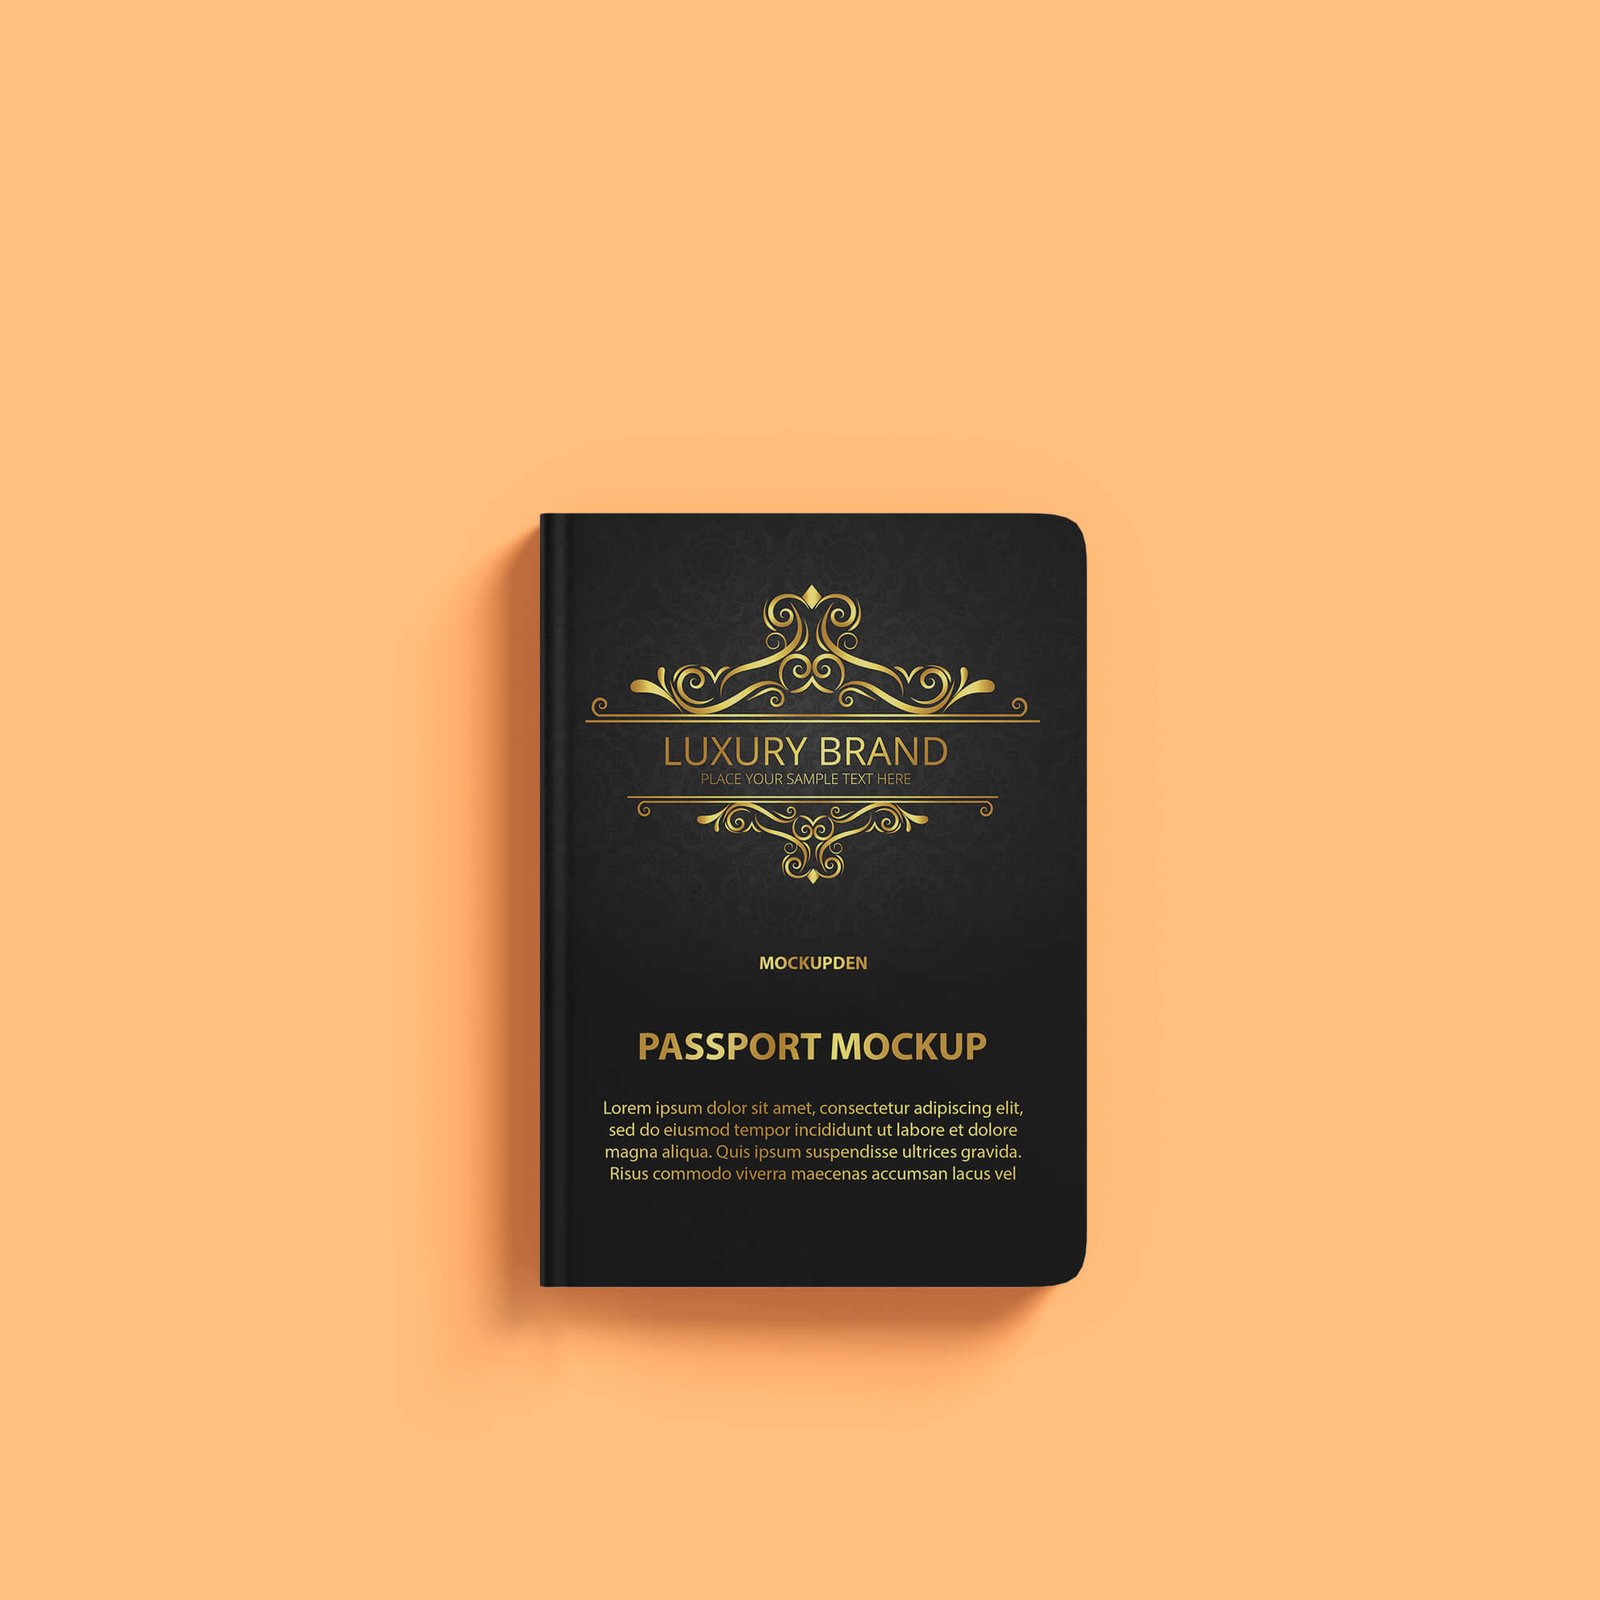 Design Free Passport Mockup PSD Template